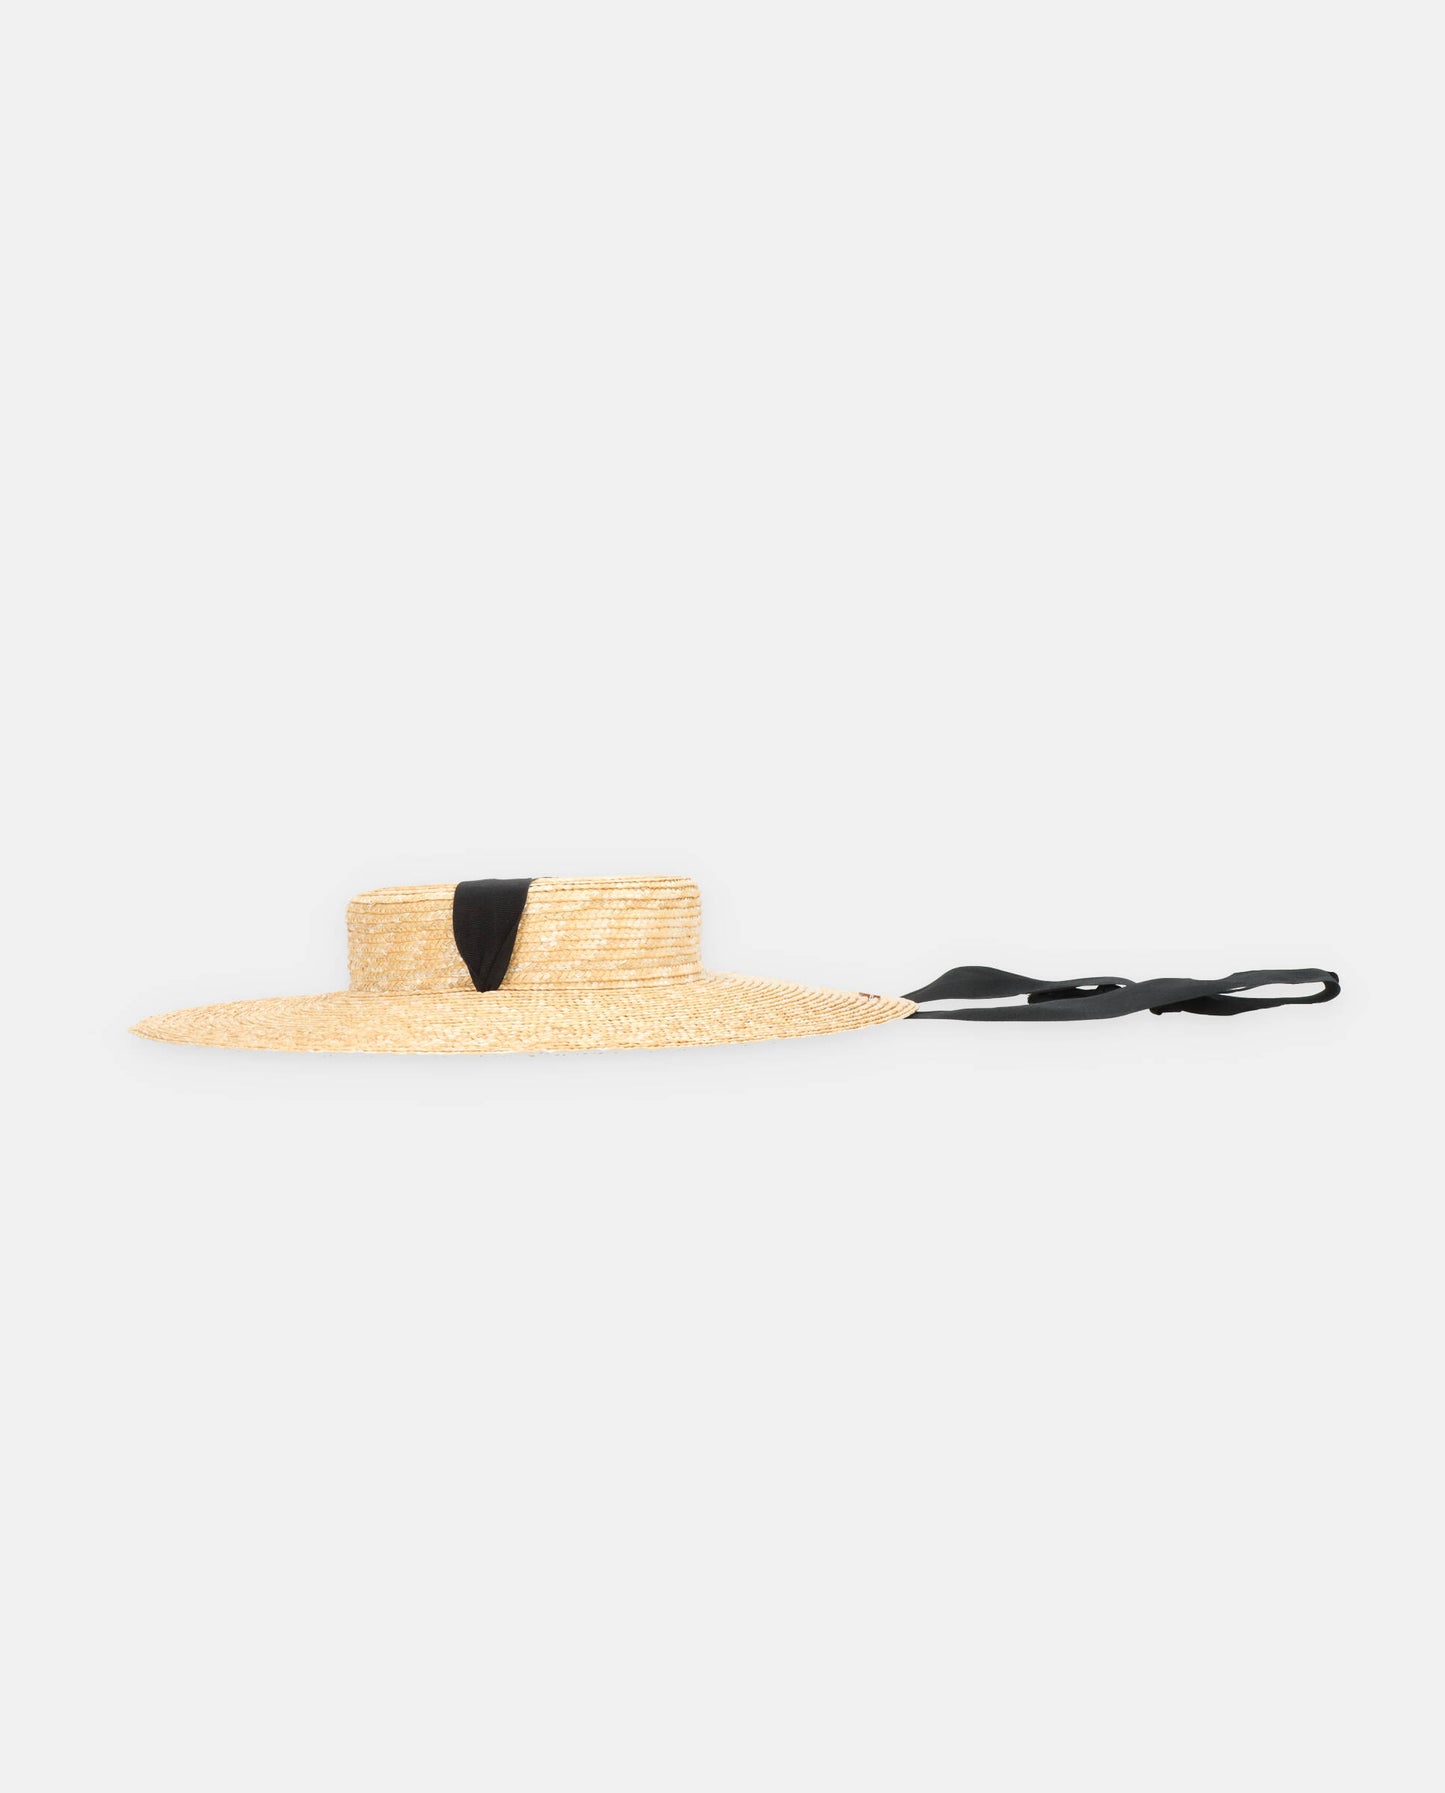 Sombrero de Paja Andalusian/Cordobes Natural